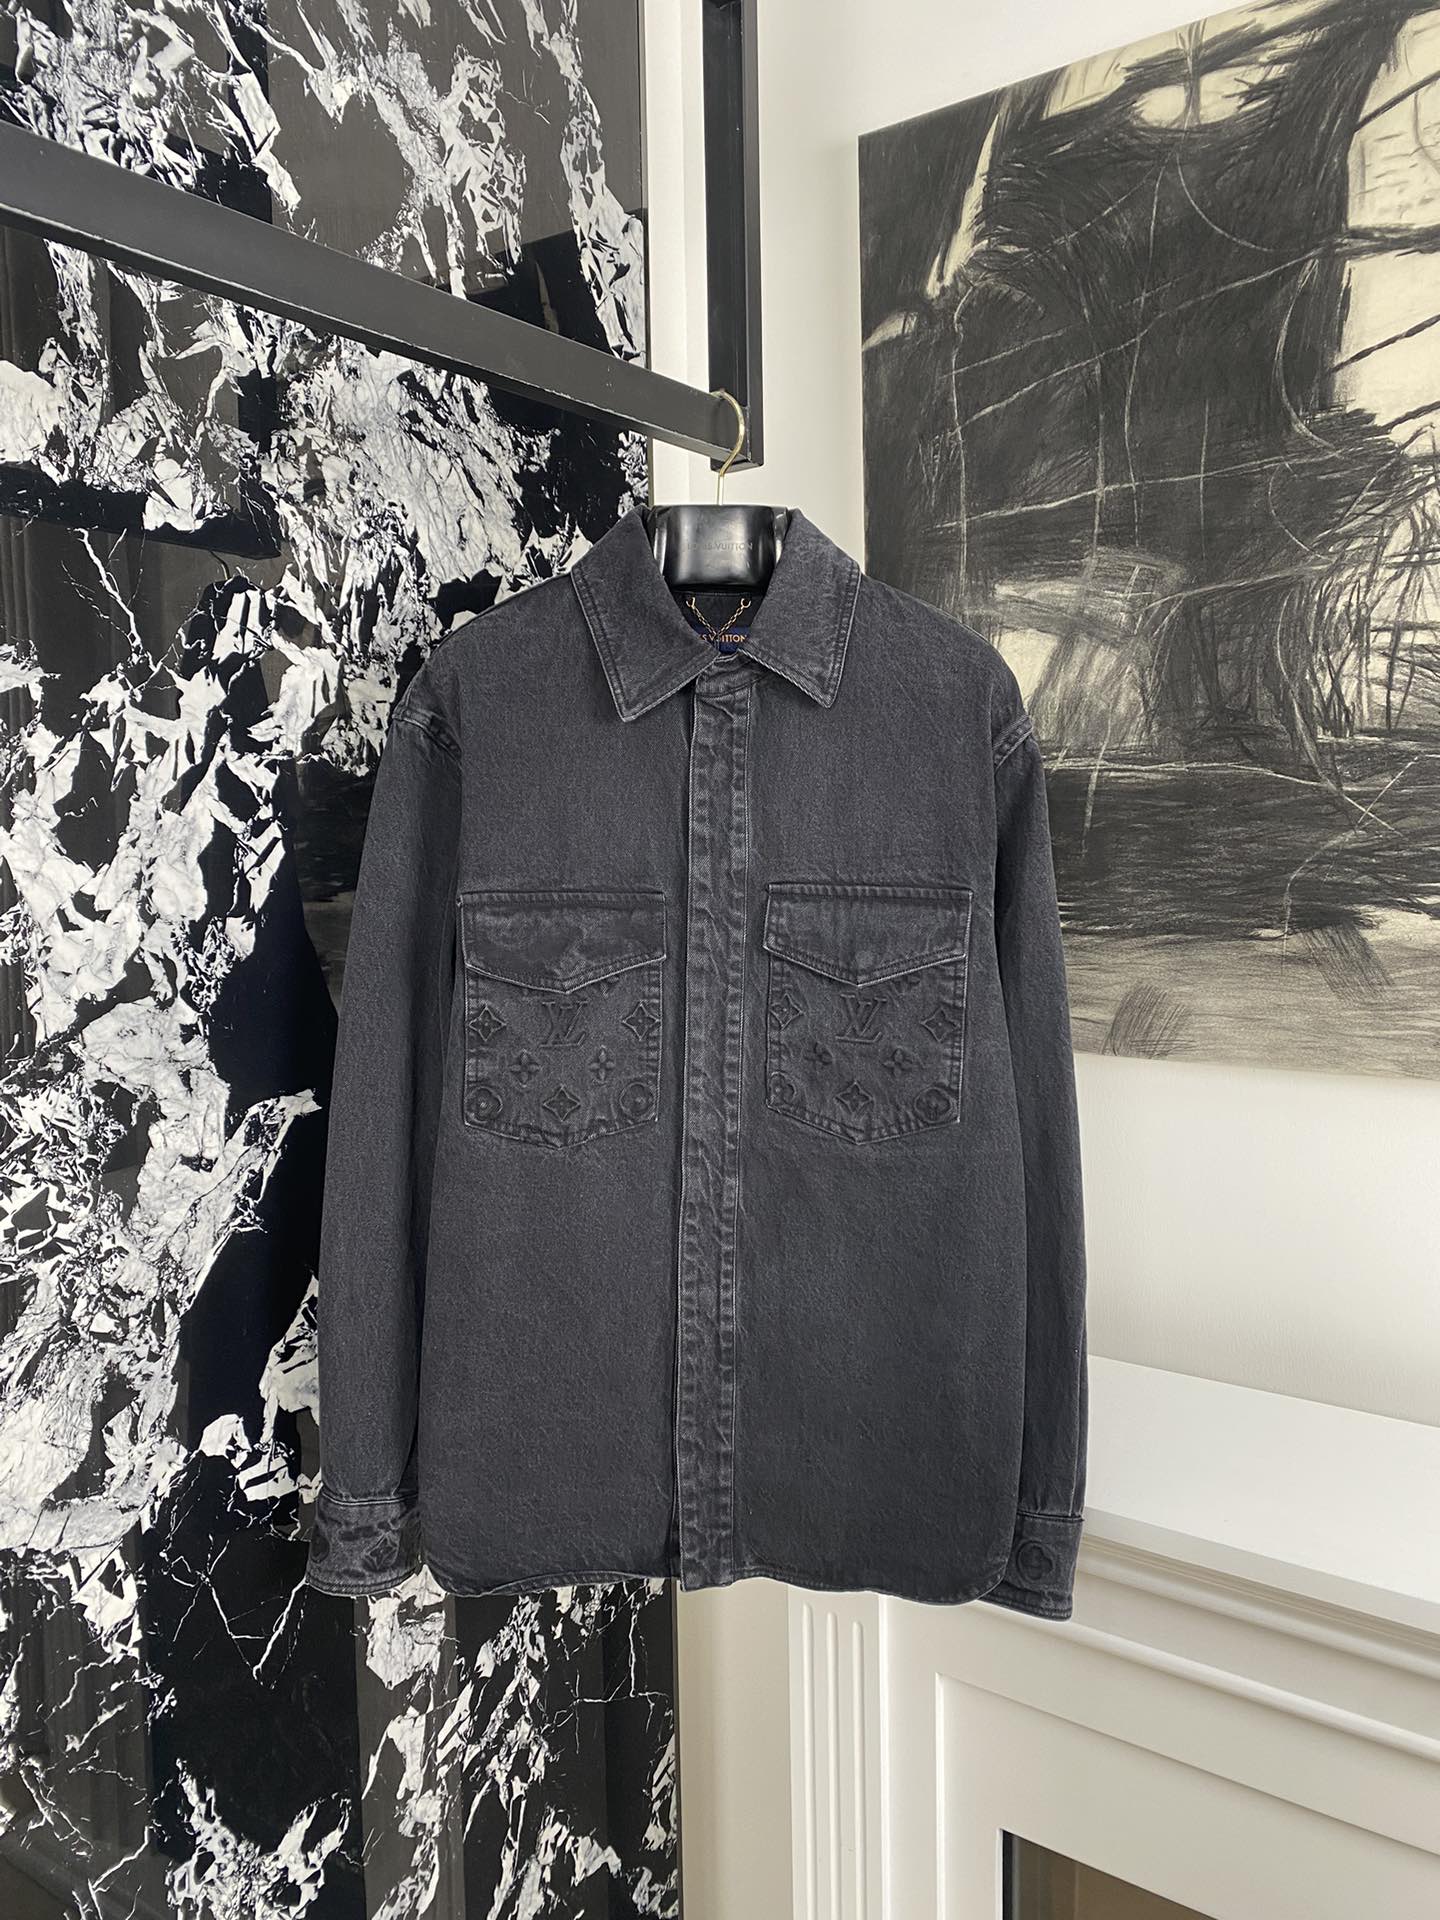 Louis Vuitton spiegelkwaliteit
 Kleding Jas &Jassen Overhemden Beste capucines replica